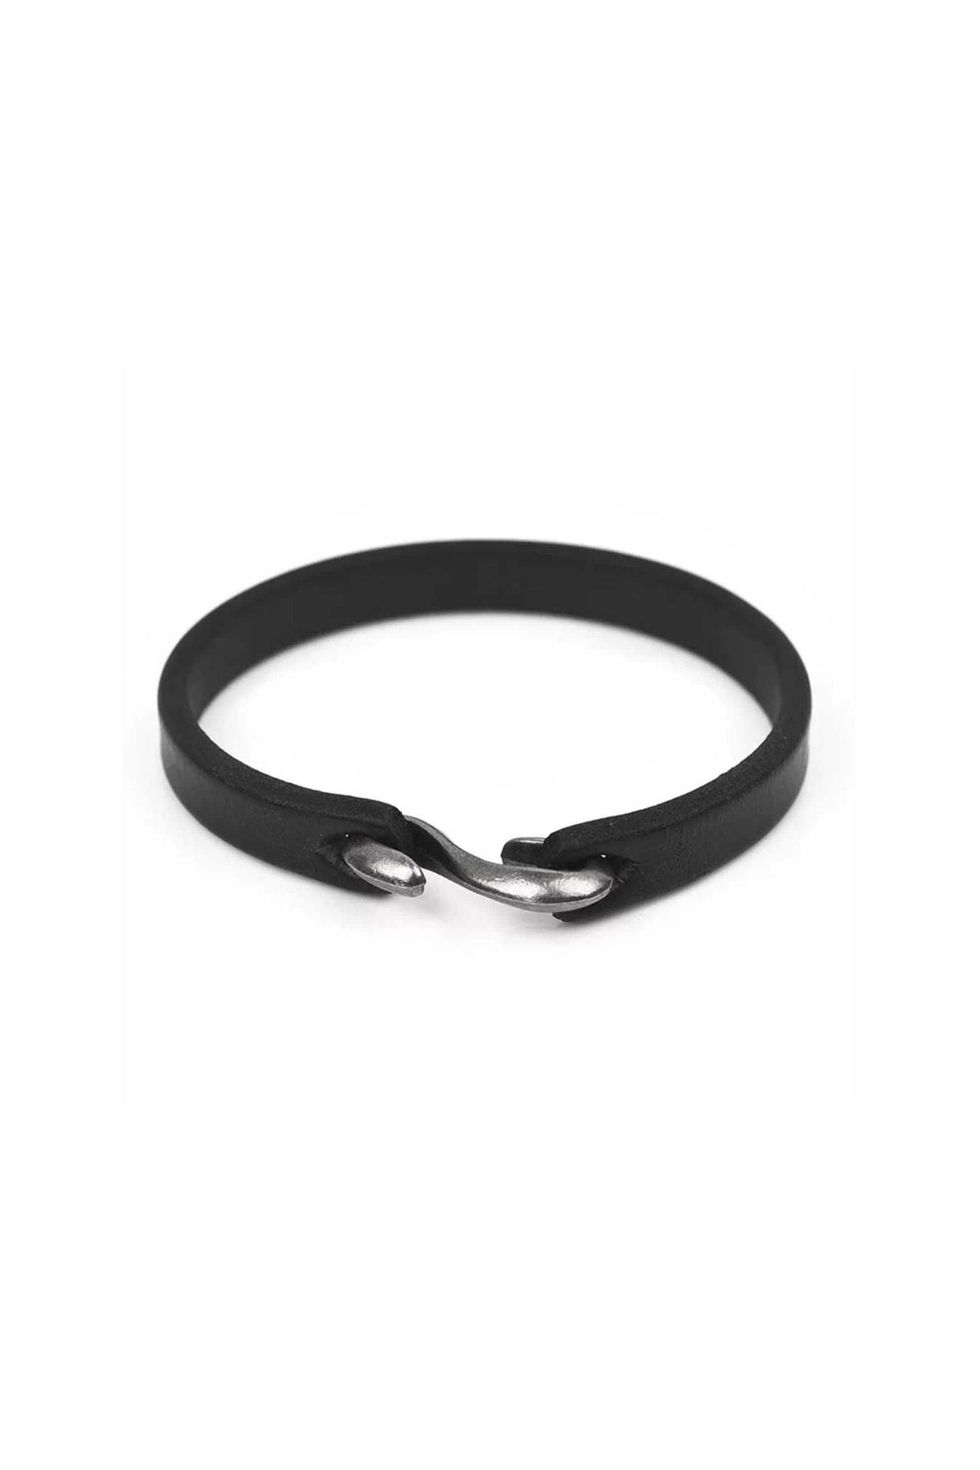 Mens Black Leather Bracelet With Metal Hook Closure